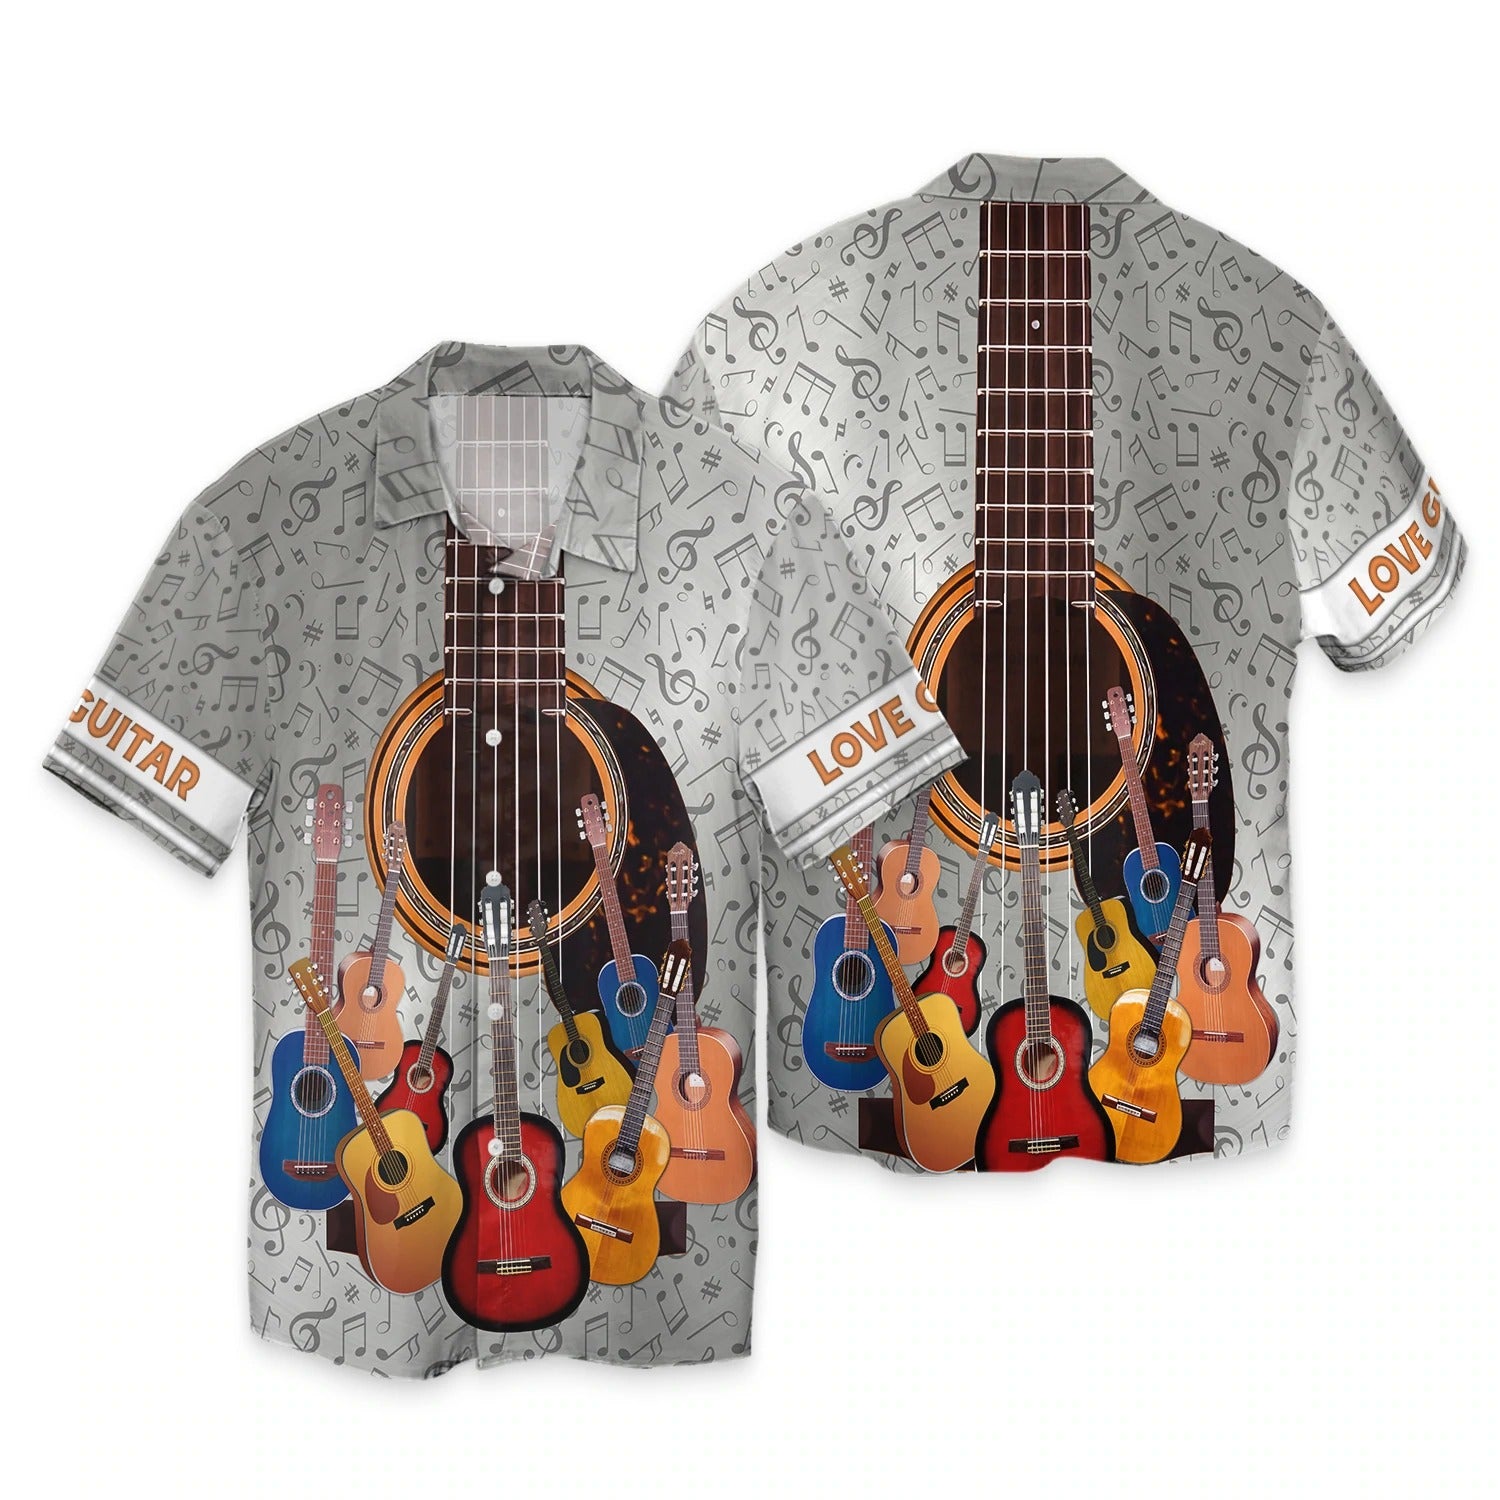 3D Full Print T Shirt For Guitarist/ Gift For Guitar Lover/ Guitar Sublimation Shirt Hoodie/ Love Guitars 3D Bomber